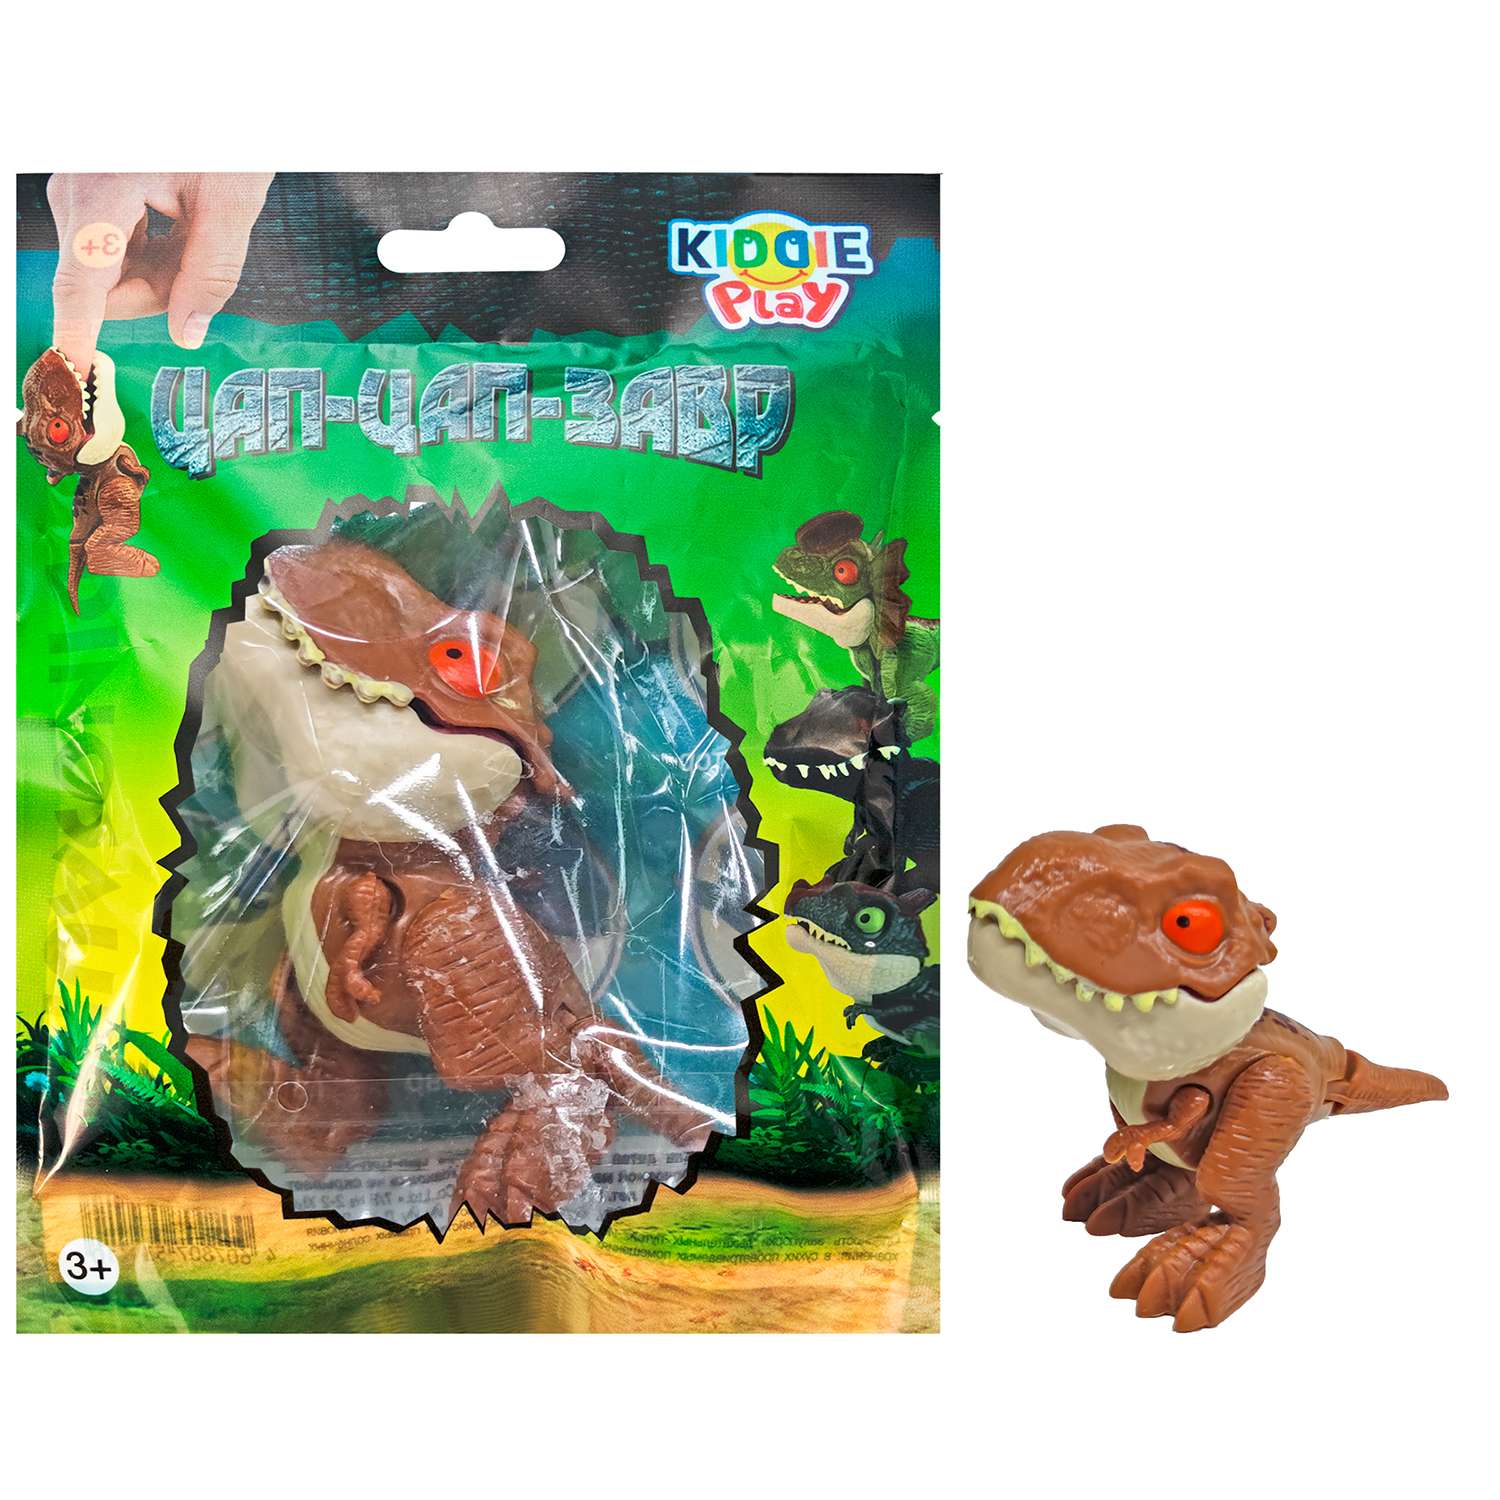 Игрушка KiddiePlay KiddiePlay Фигурка динозавра Цап-Цап-Завр в ассортименте 12605 - фото 11